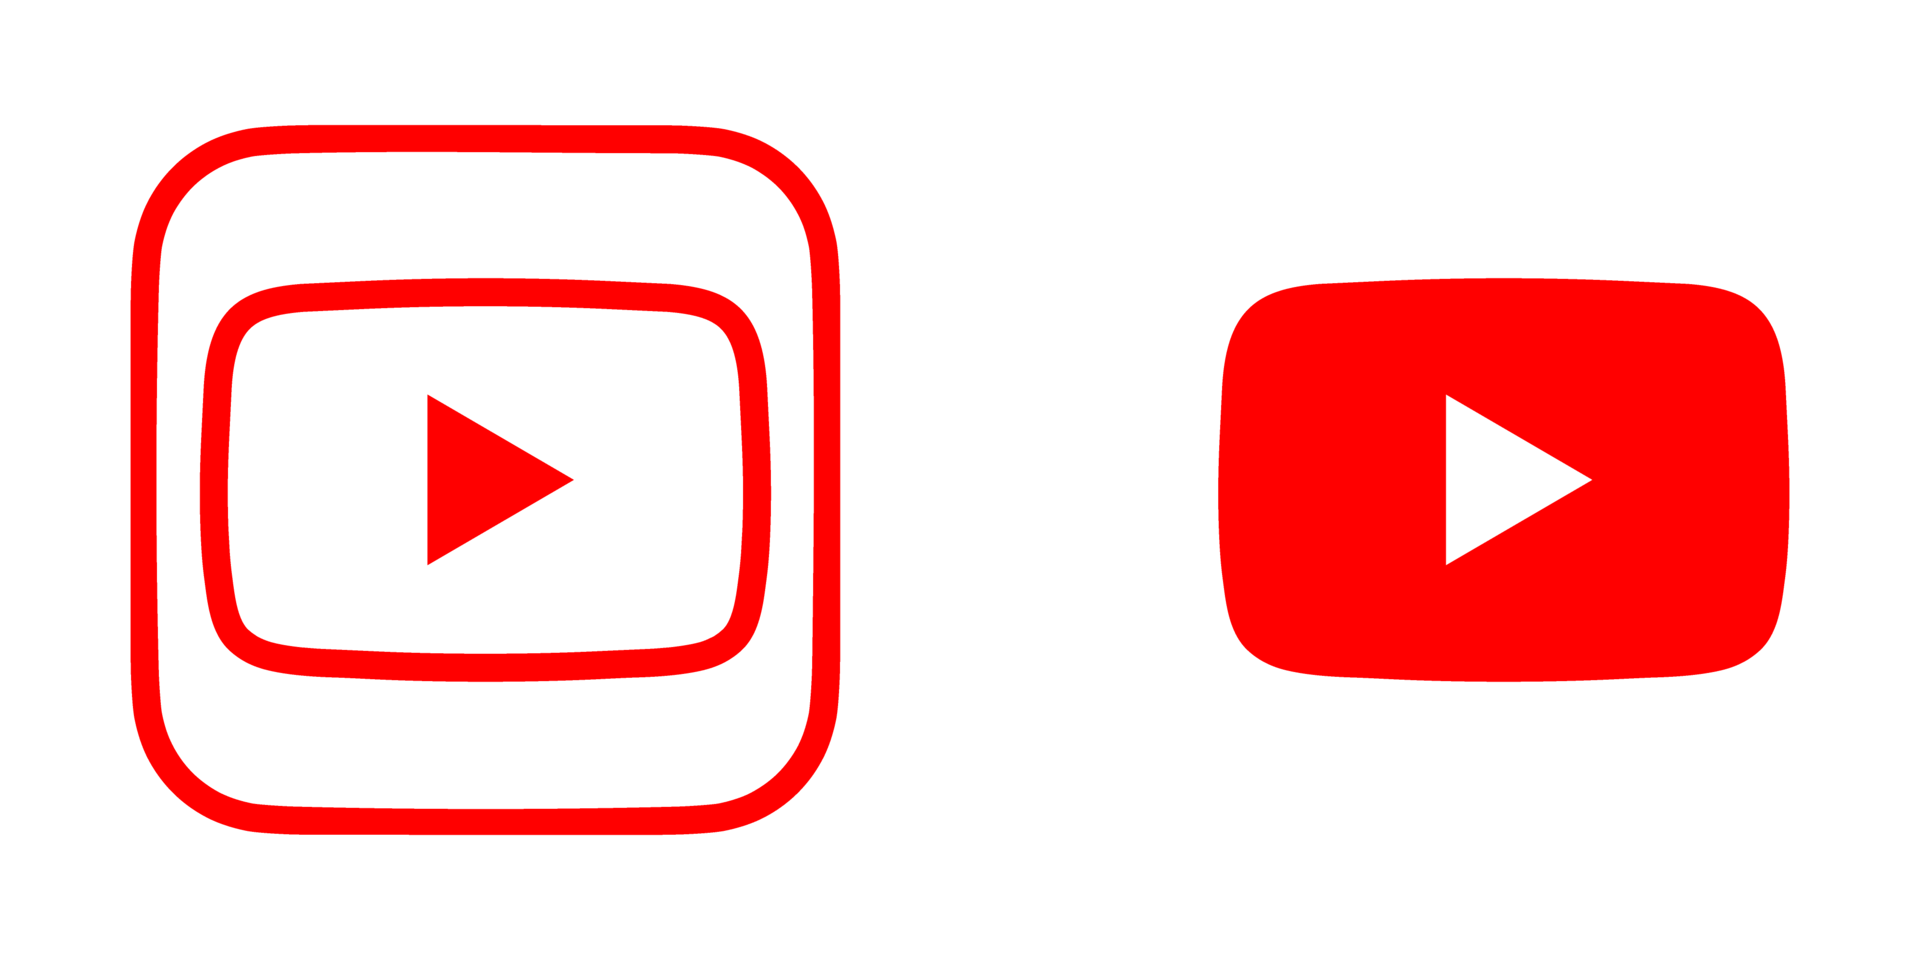 Youtube logotipo png, Youtube logotipo transparente png, Youtube ícone transparente livre png